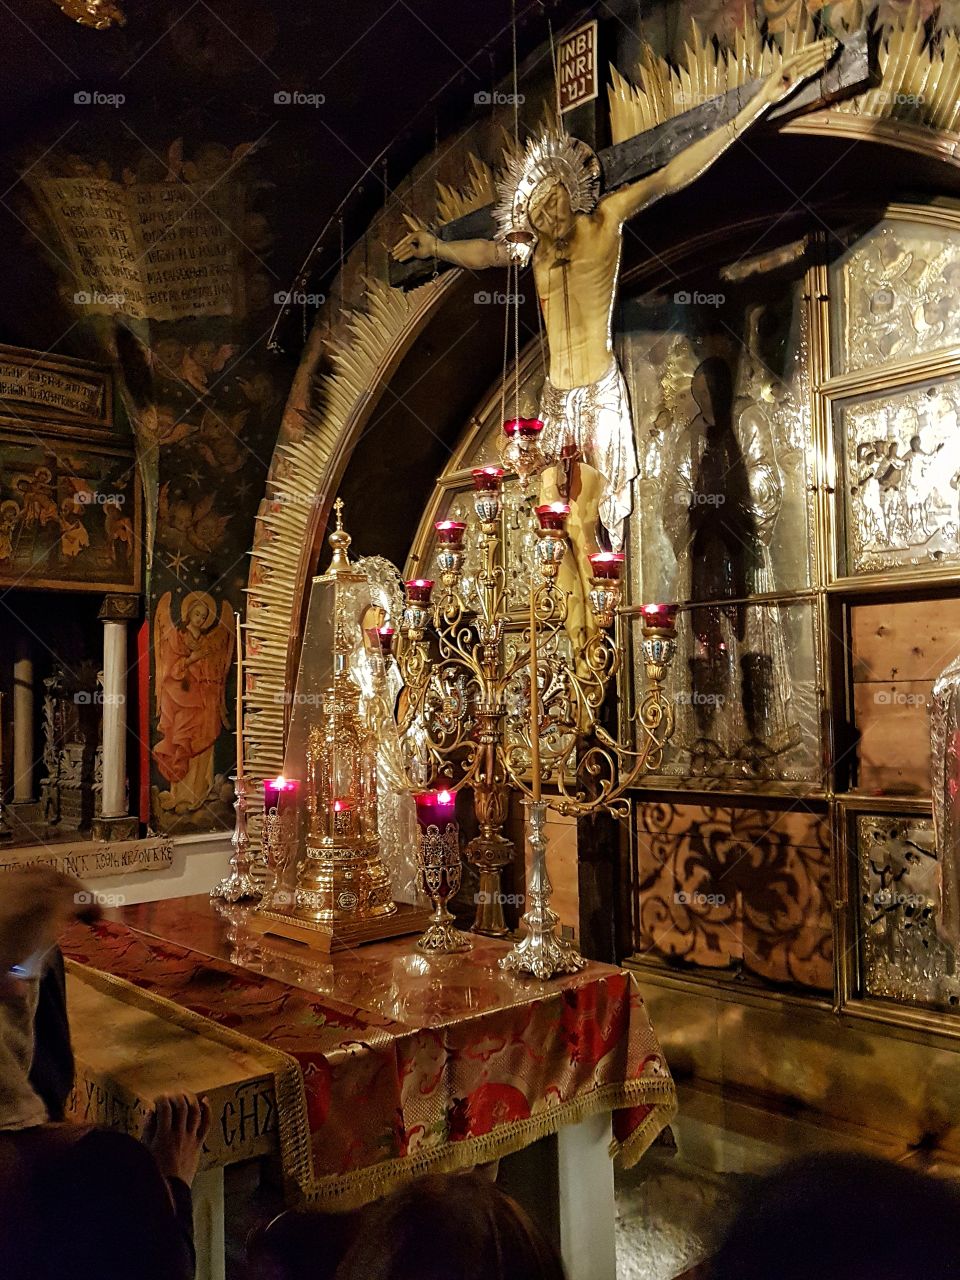 where jesus was crucified, sepulchre